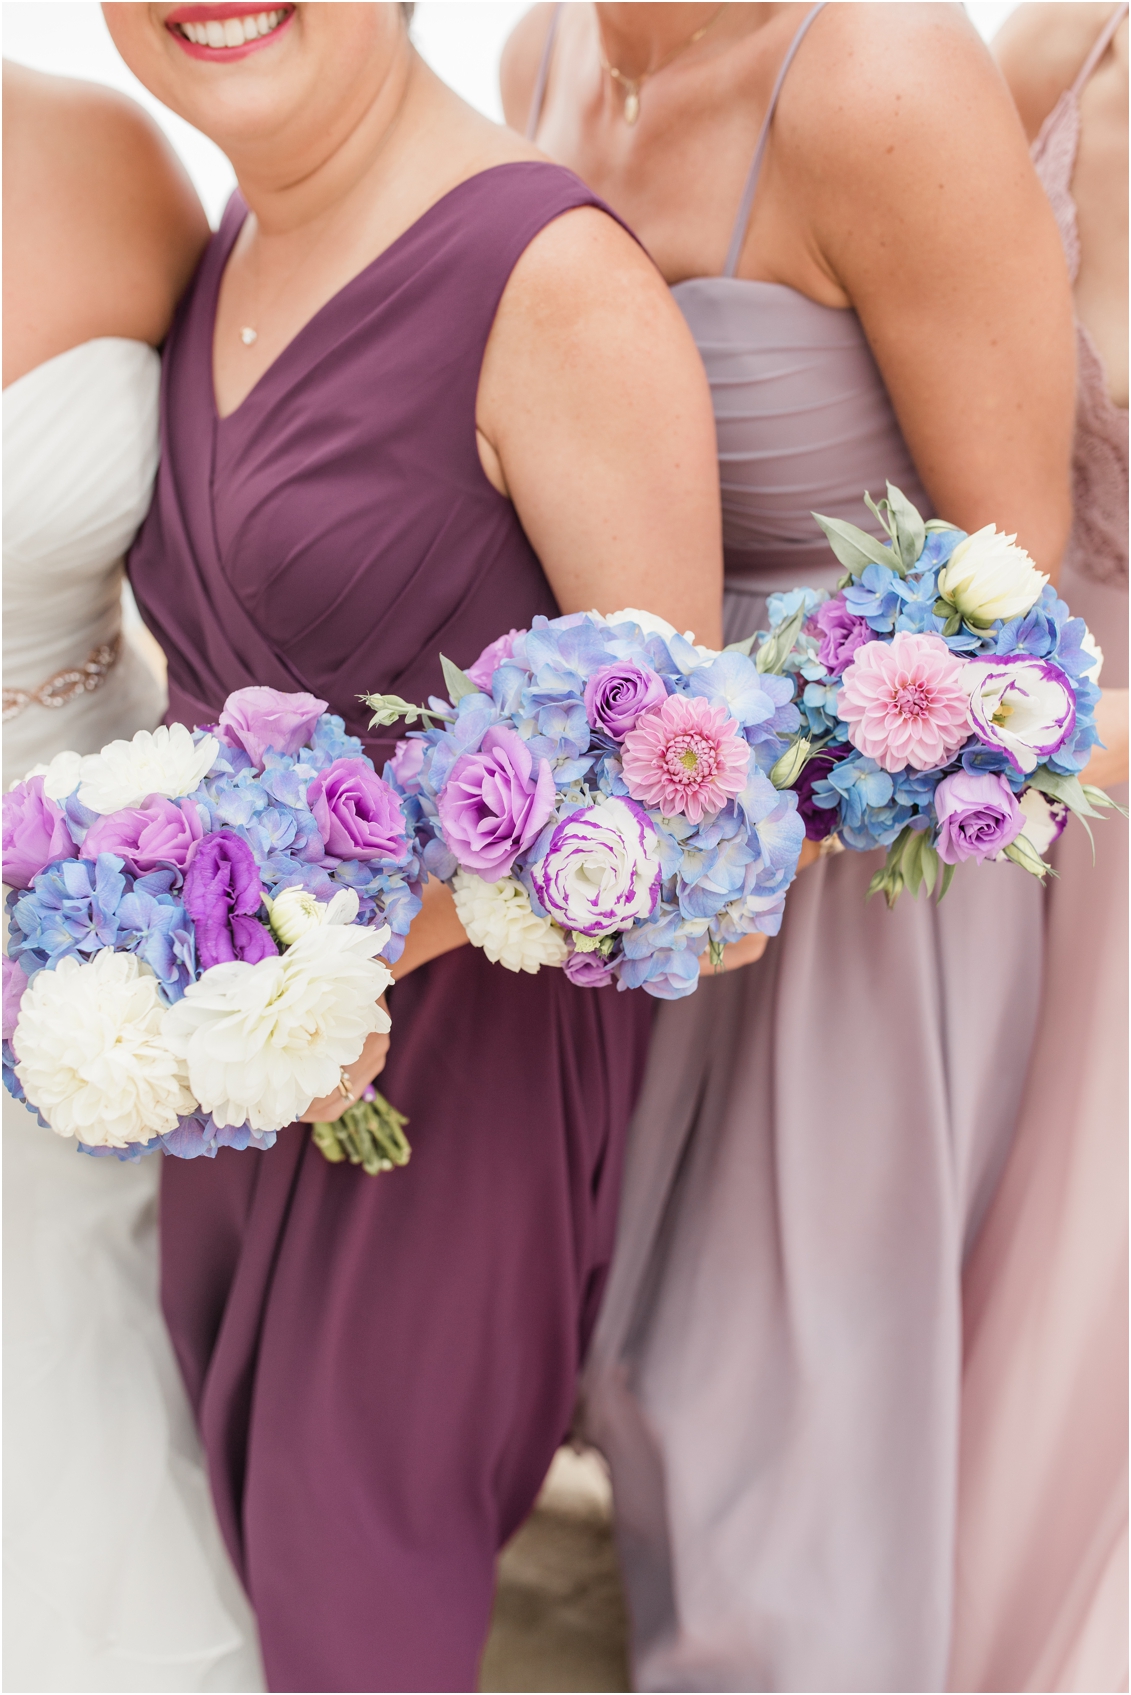 purple bridesmaids dresses, bridesmaids portraits by gaby caskey photography